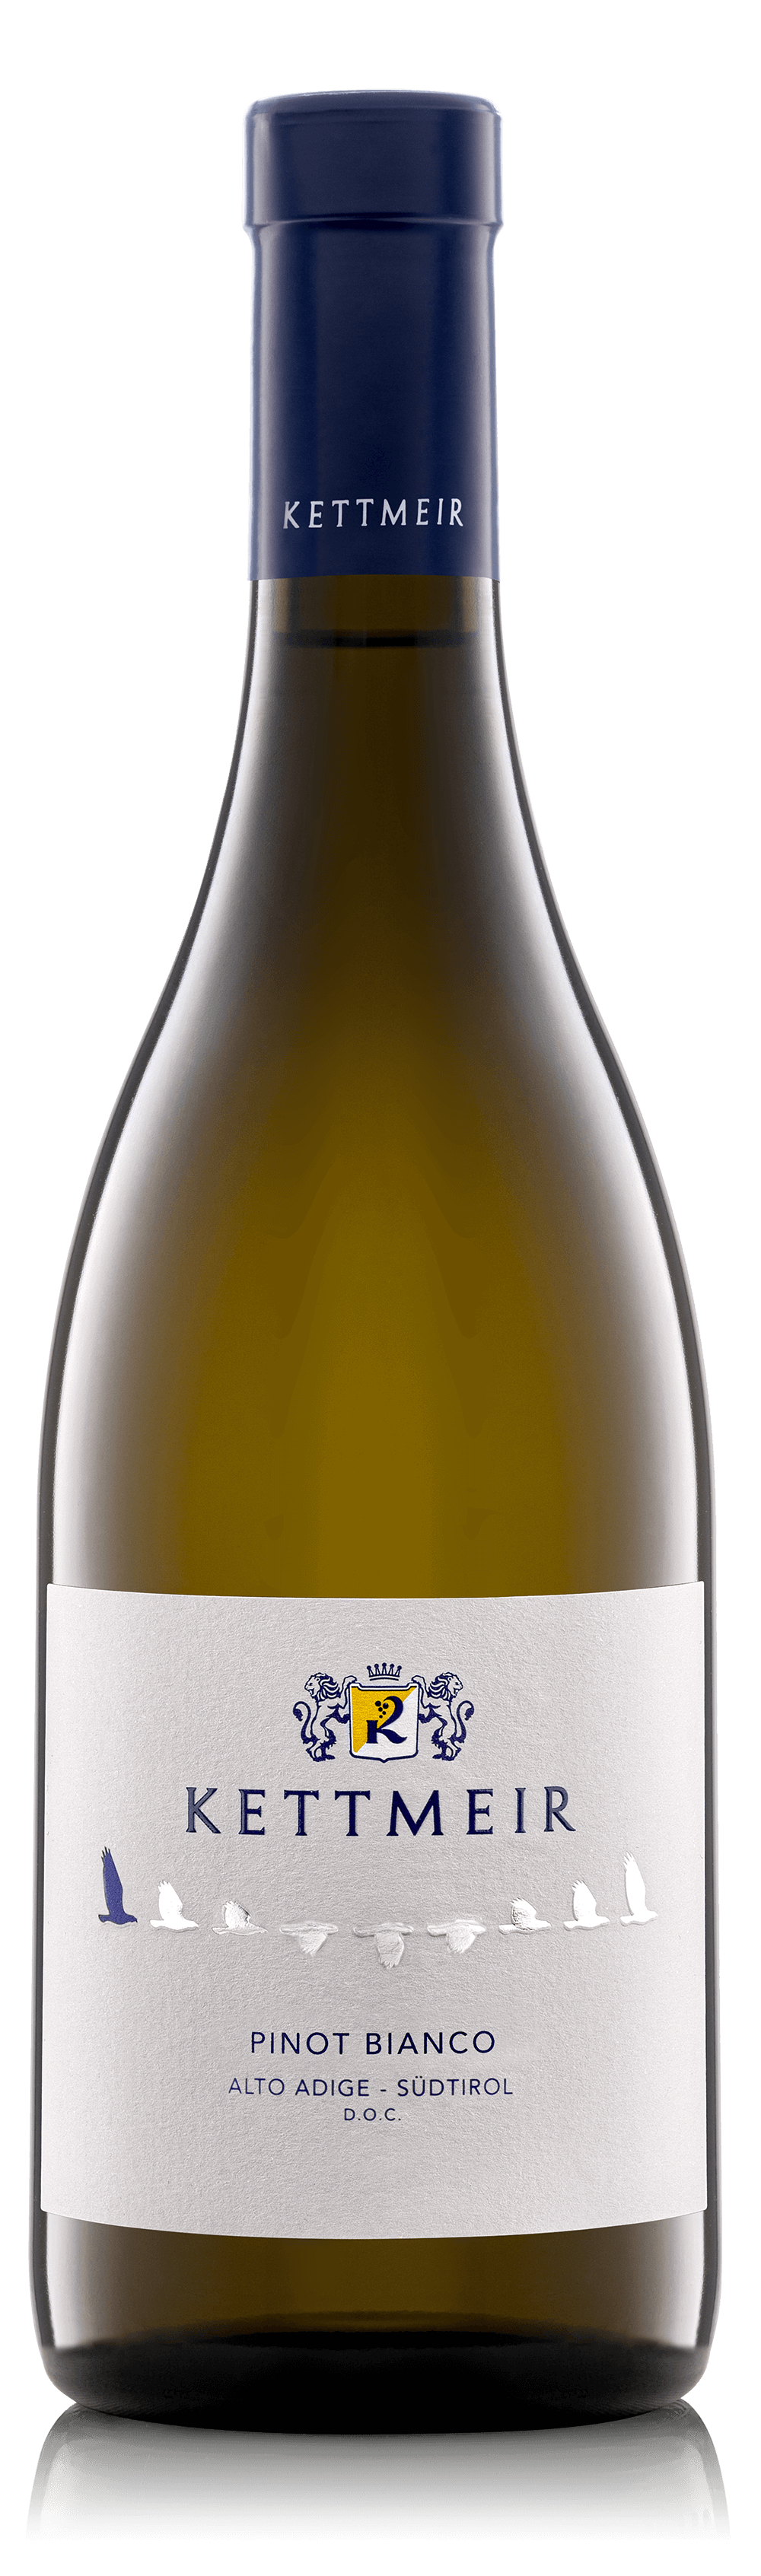 Pinot Bianco || Alto Adige DOC